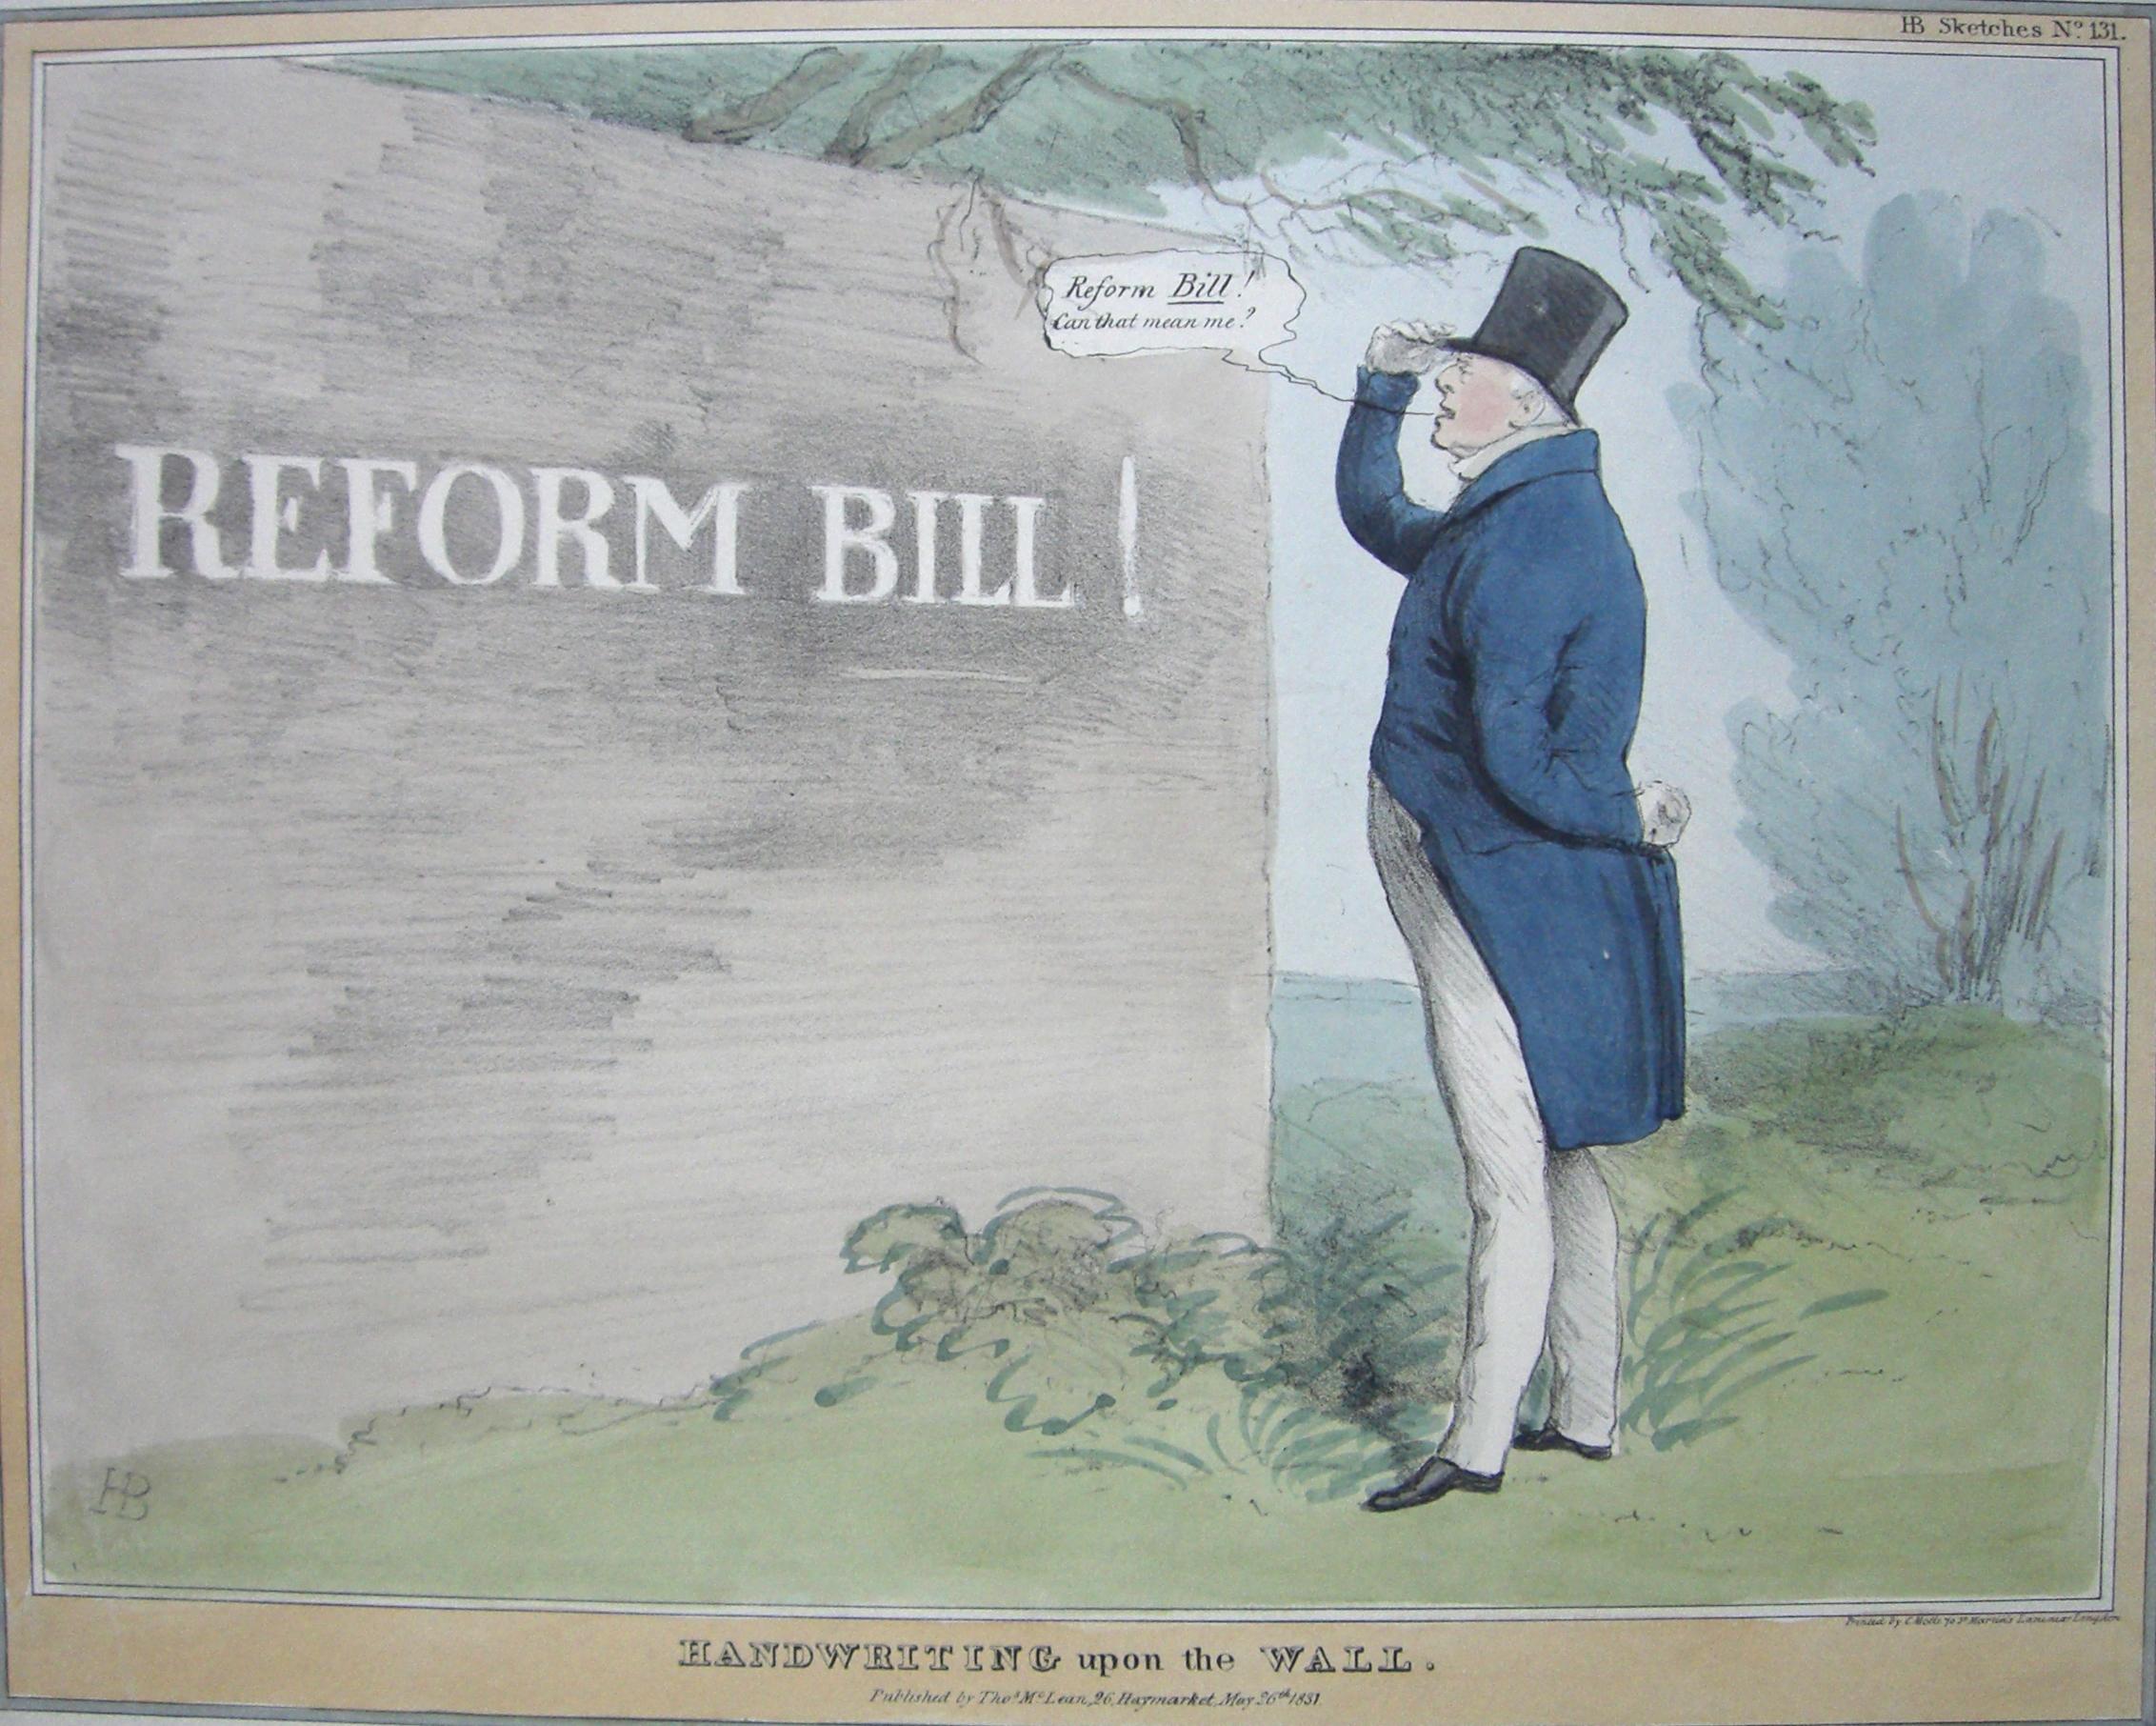 John Doyle Figurative Print - Handwriting Upon the Wall – Reform Bill! - Lithograph by J. Doyle - 1831